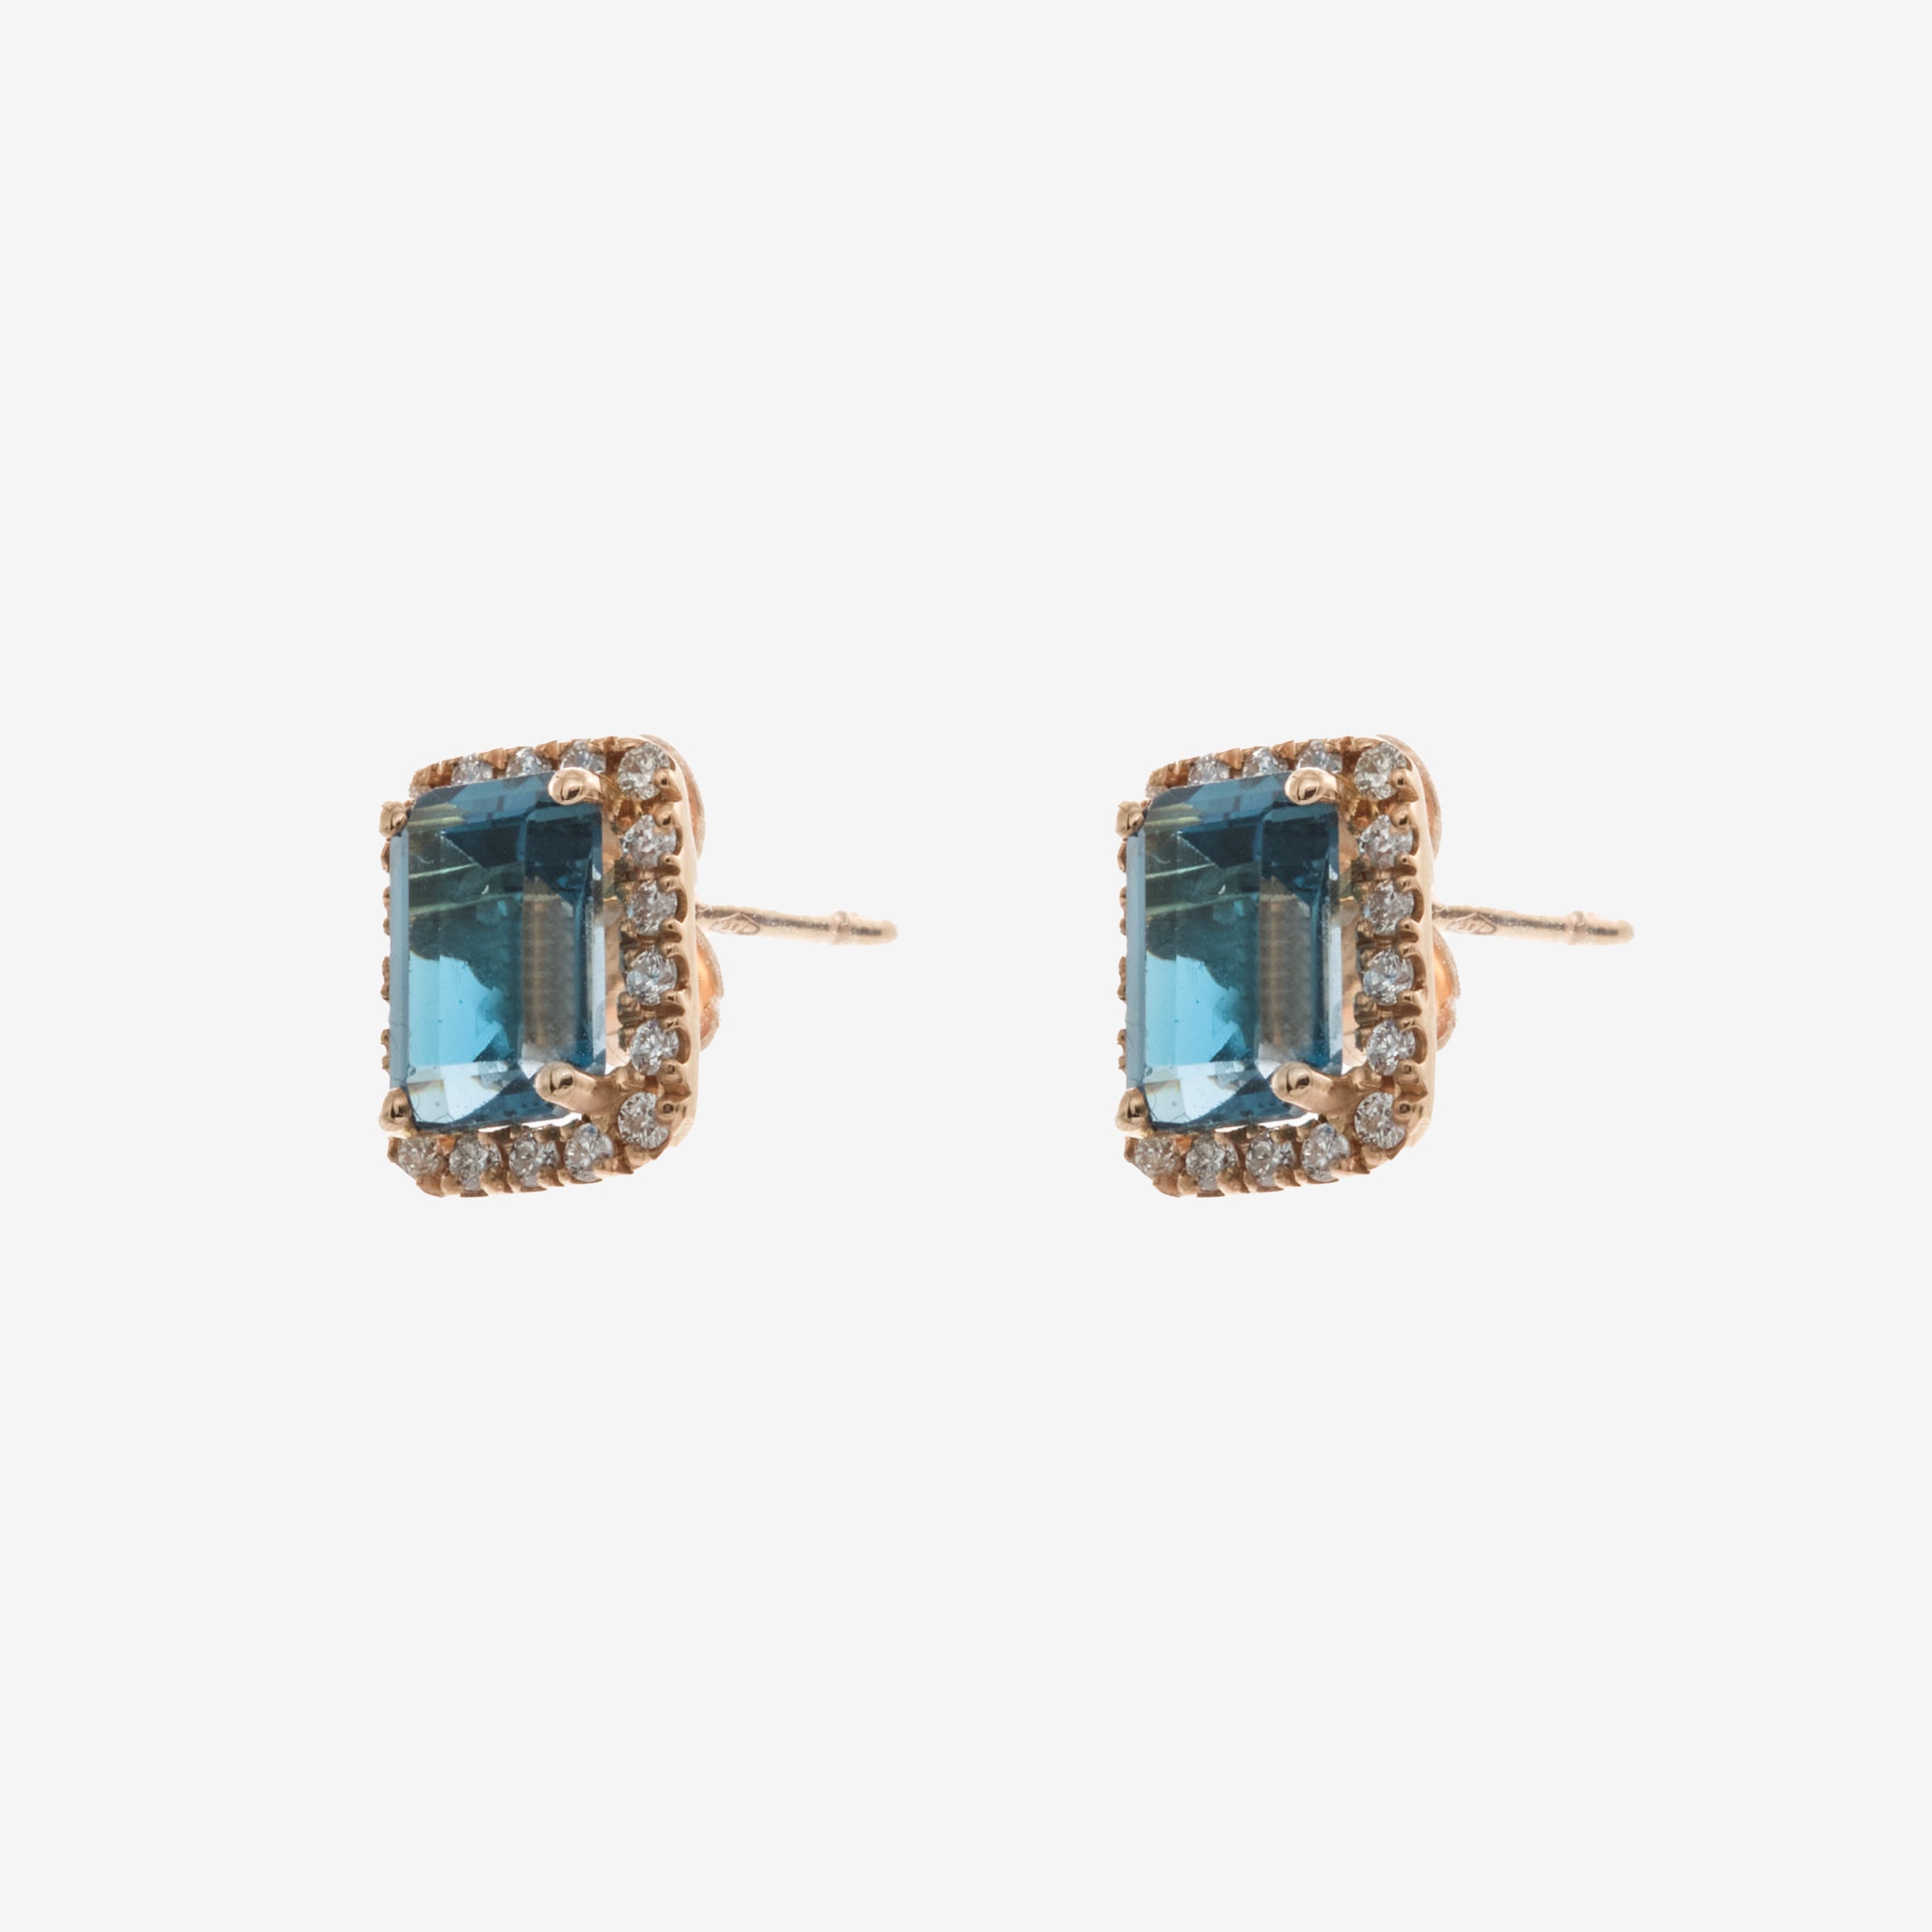 Esha earrings with London topaz and diamonds